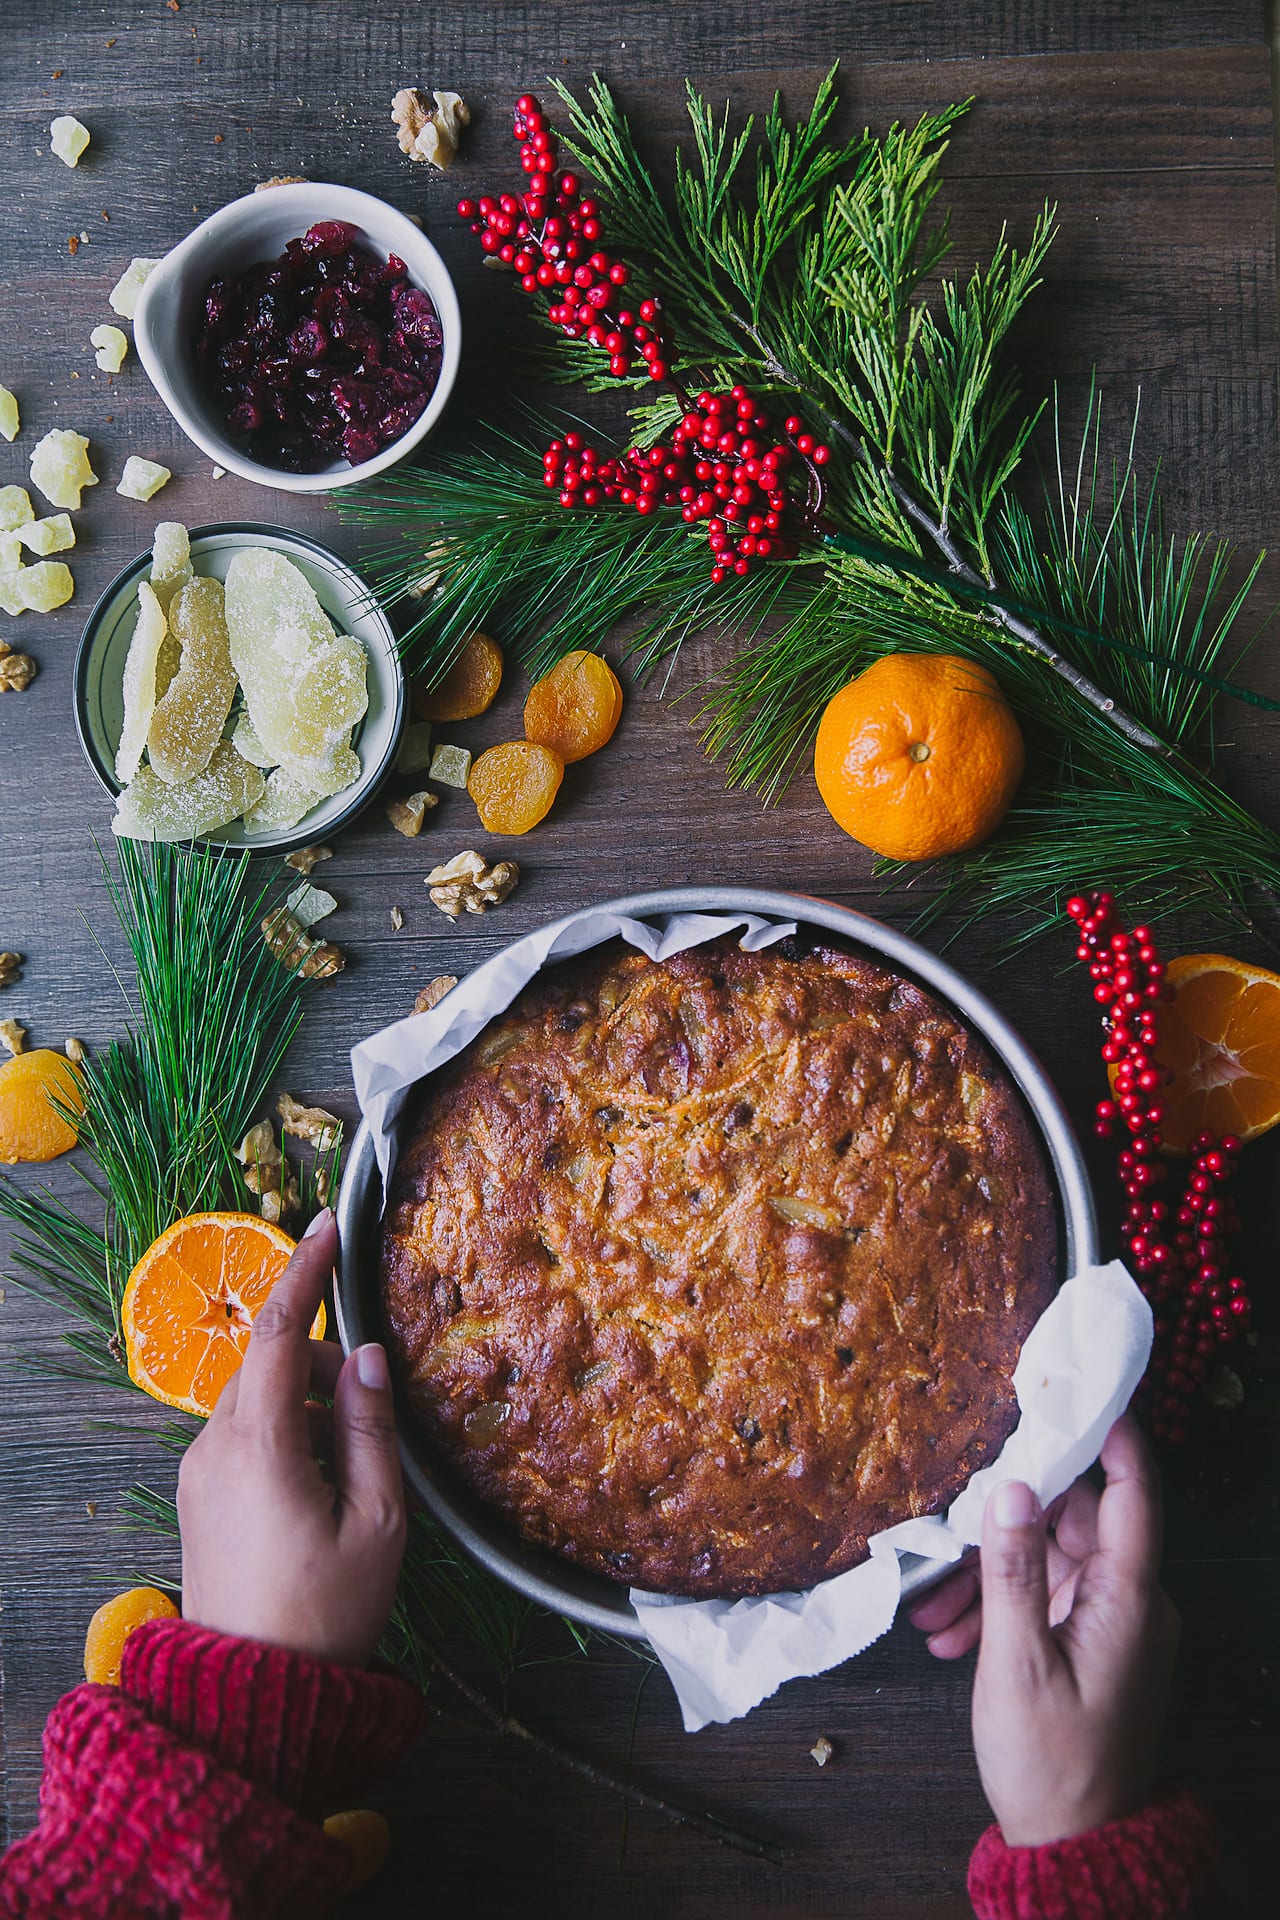 Carrot Orange Christmas Fruit Cake | Playful Cooking #cake #photography #christmascake #fruit #baking